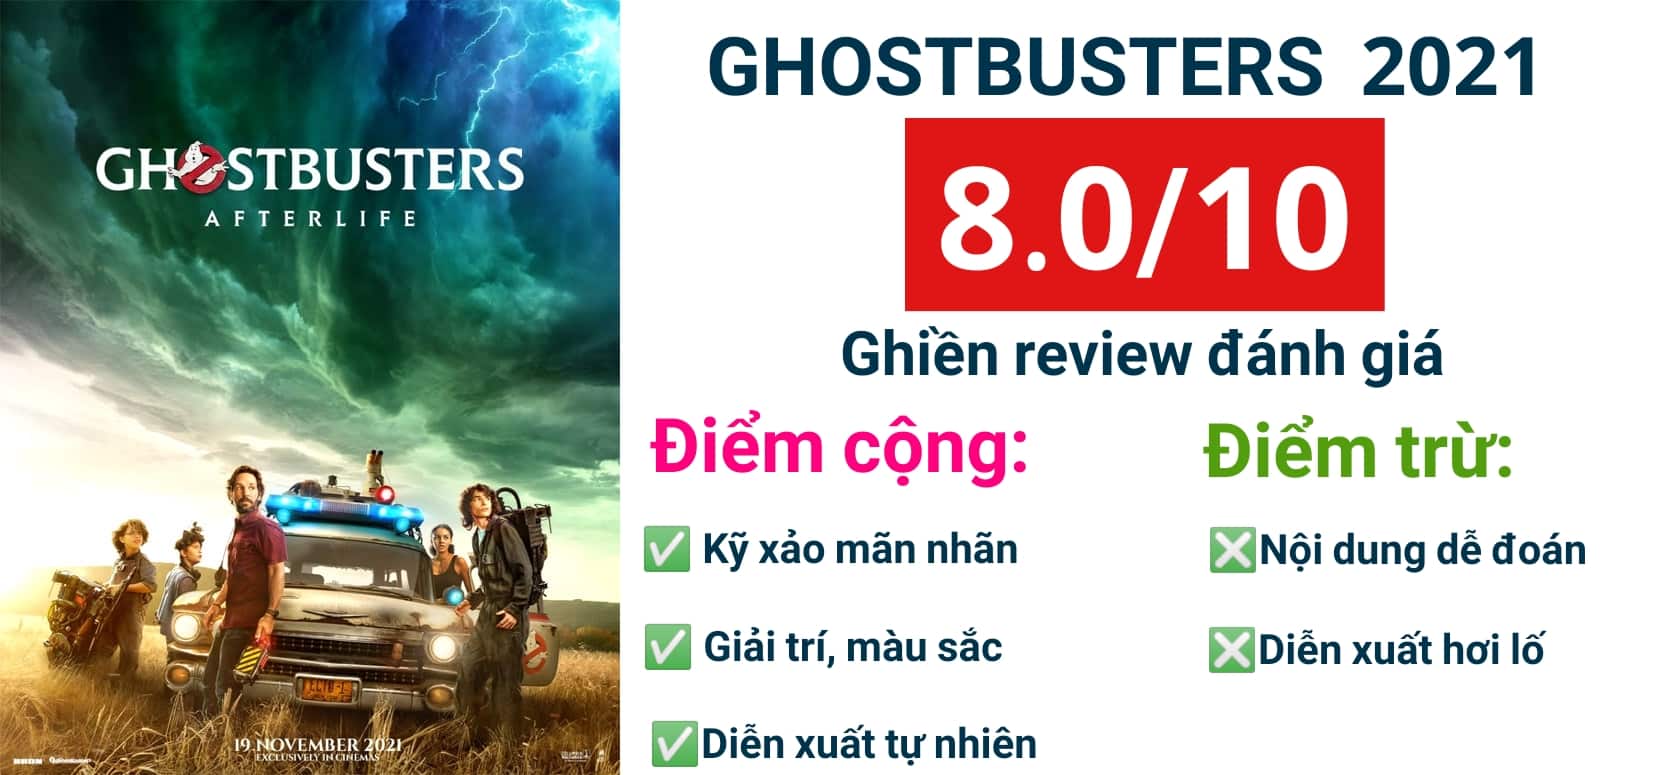 Ghienreview -Ghostbusters - Biet doi san ma